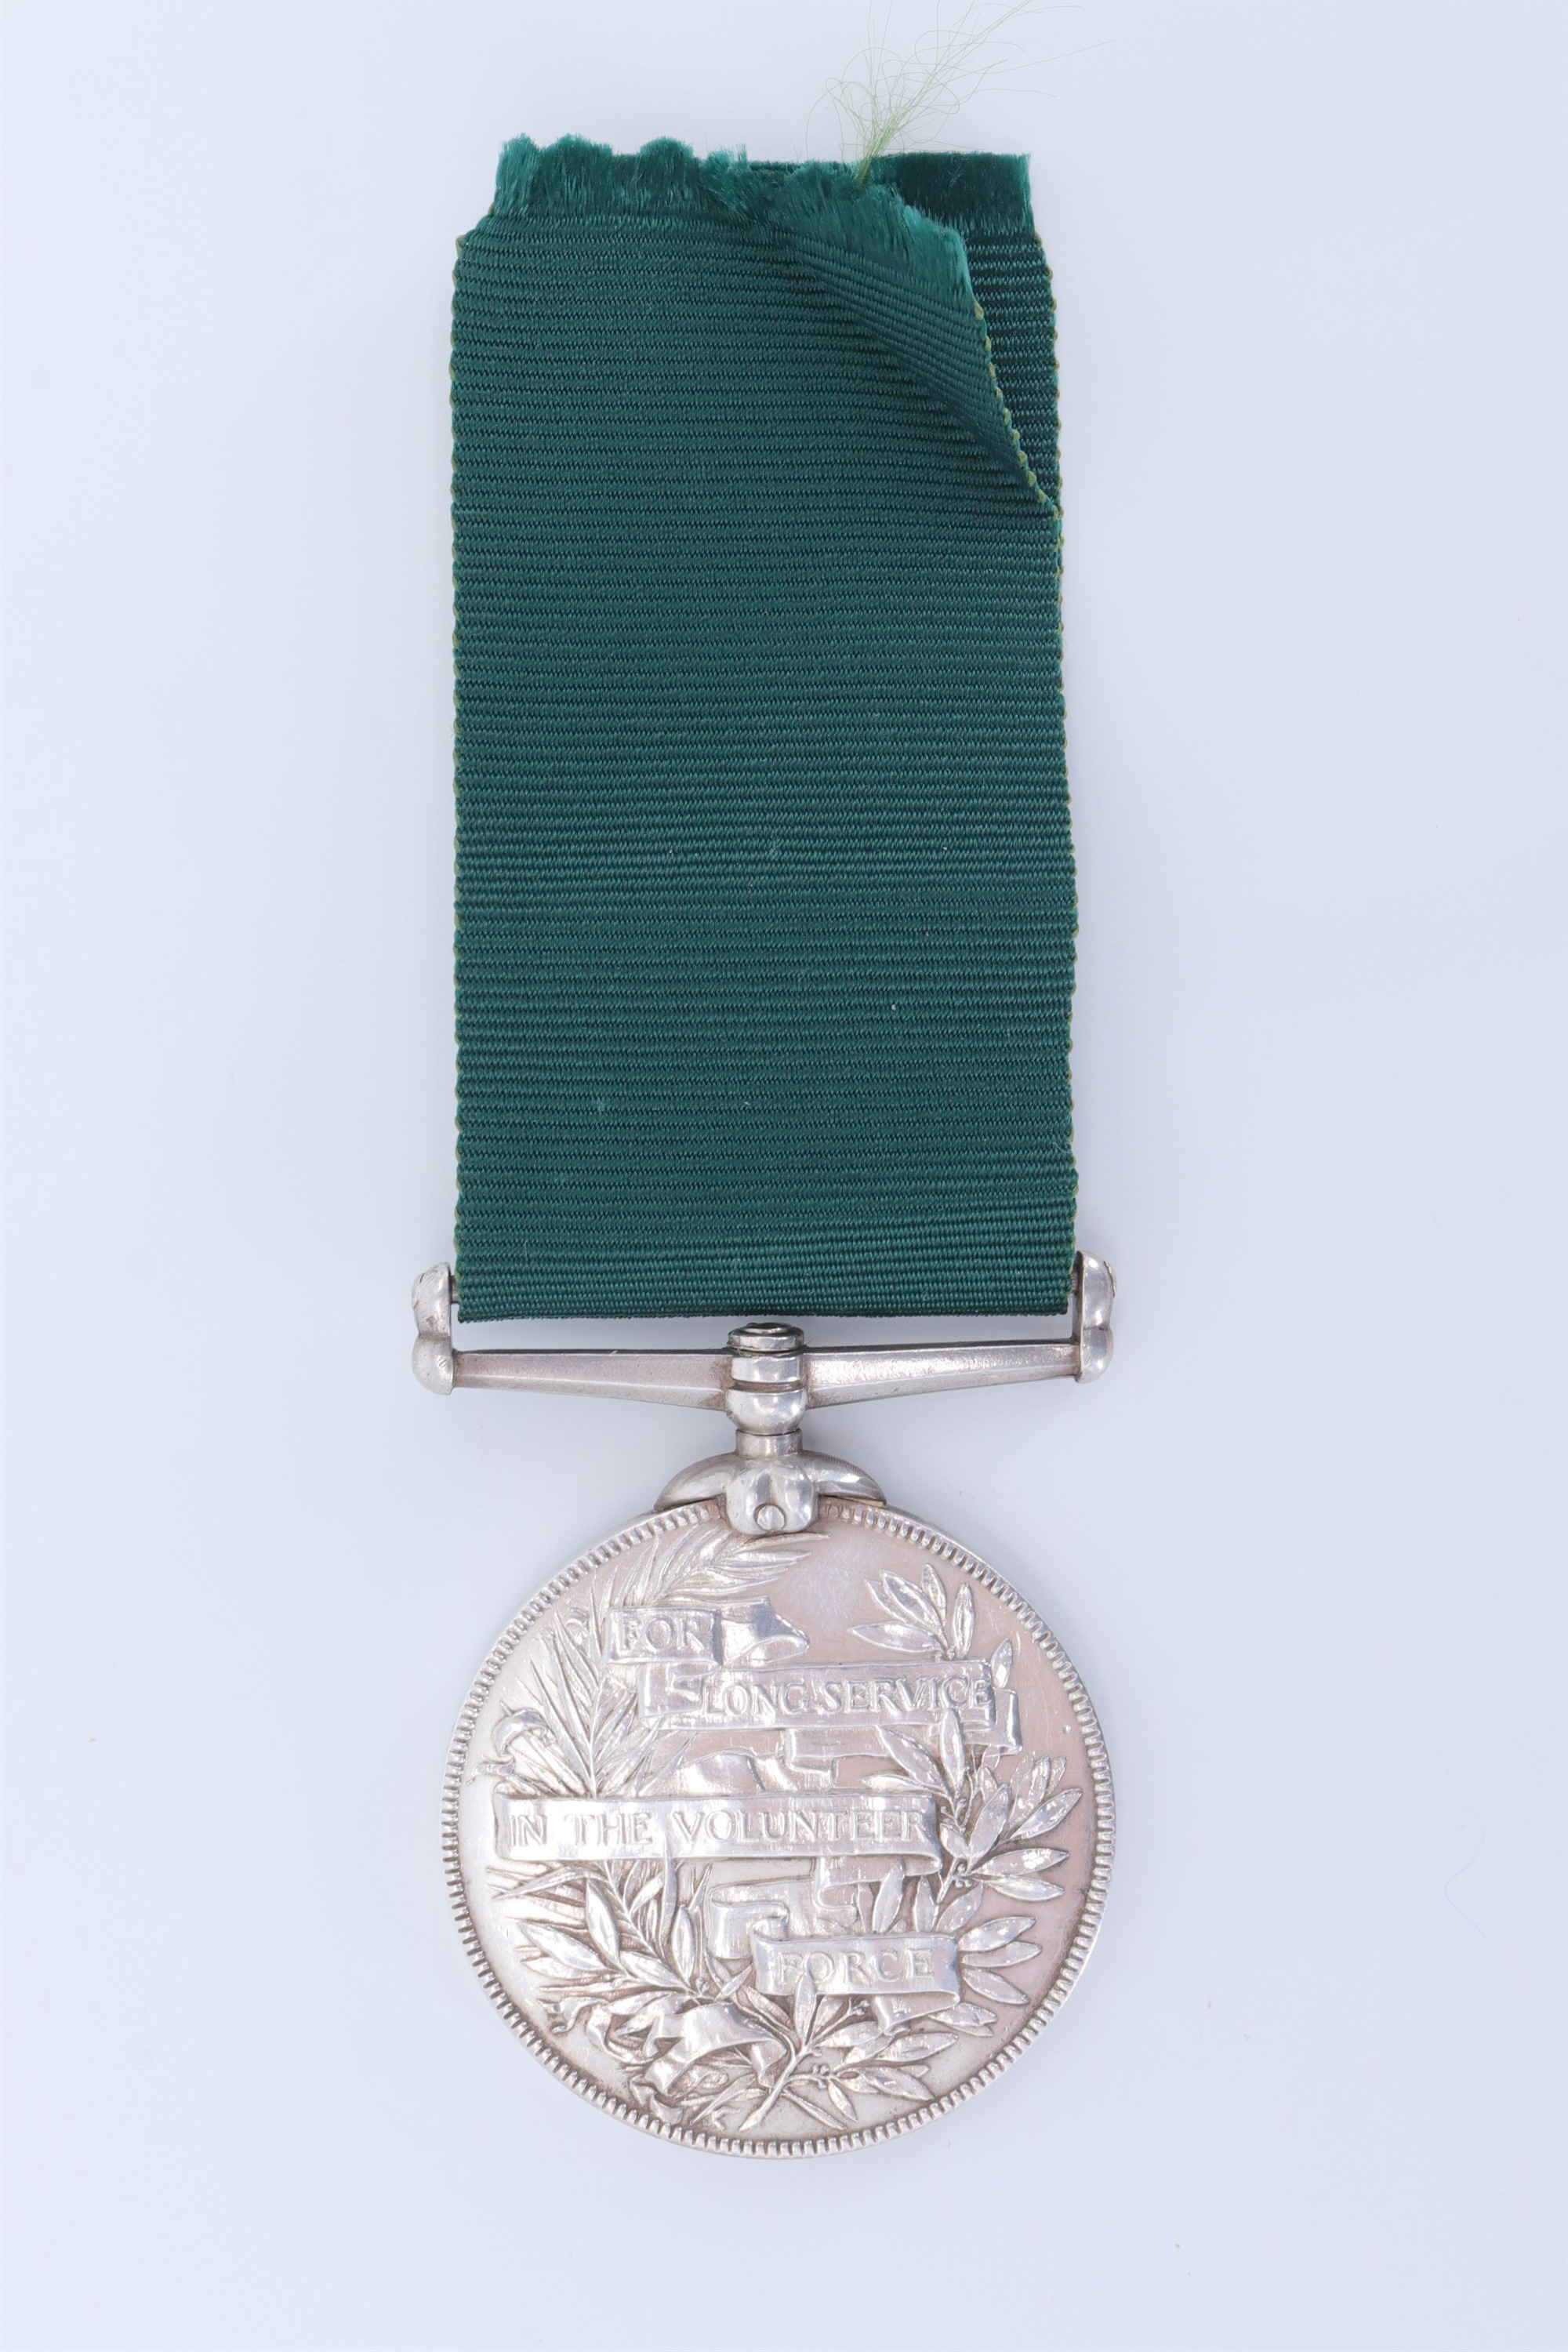 A Victorian Volunteer Long Service medal to 1840 Pioneer Sergt W Morrison, 5th Volunteer Battalion - Image 2 of 5